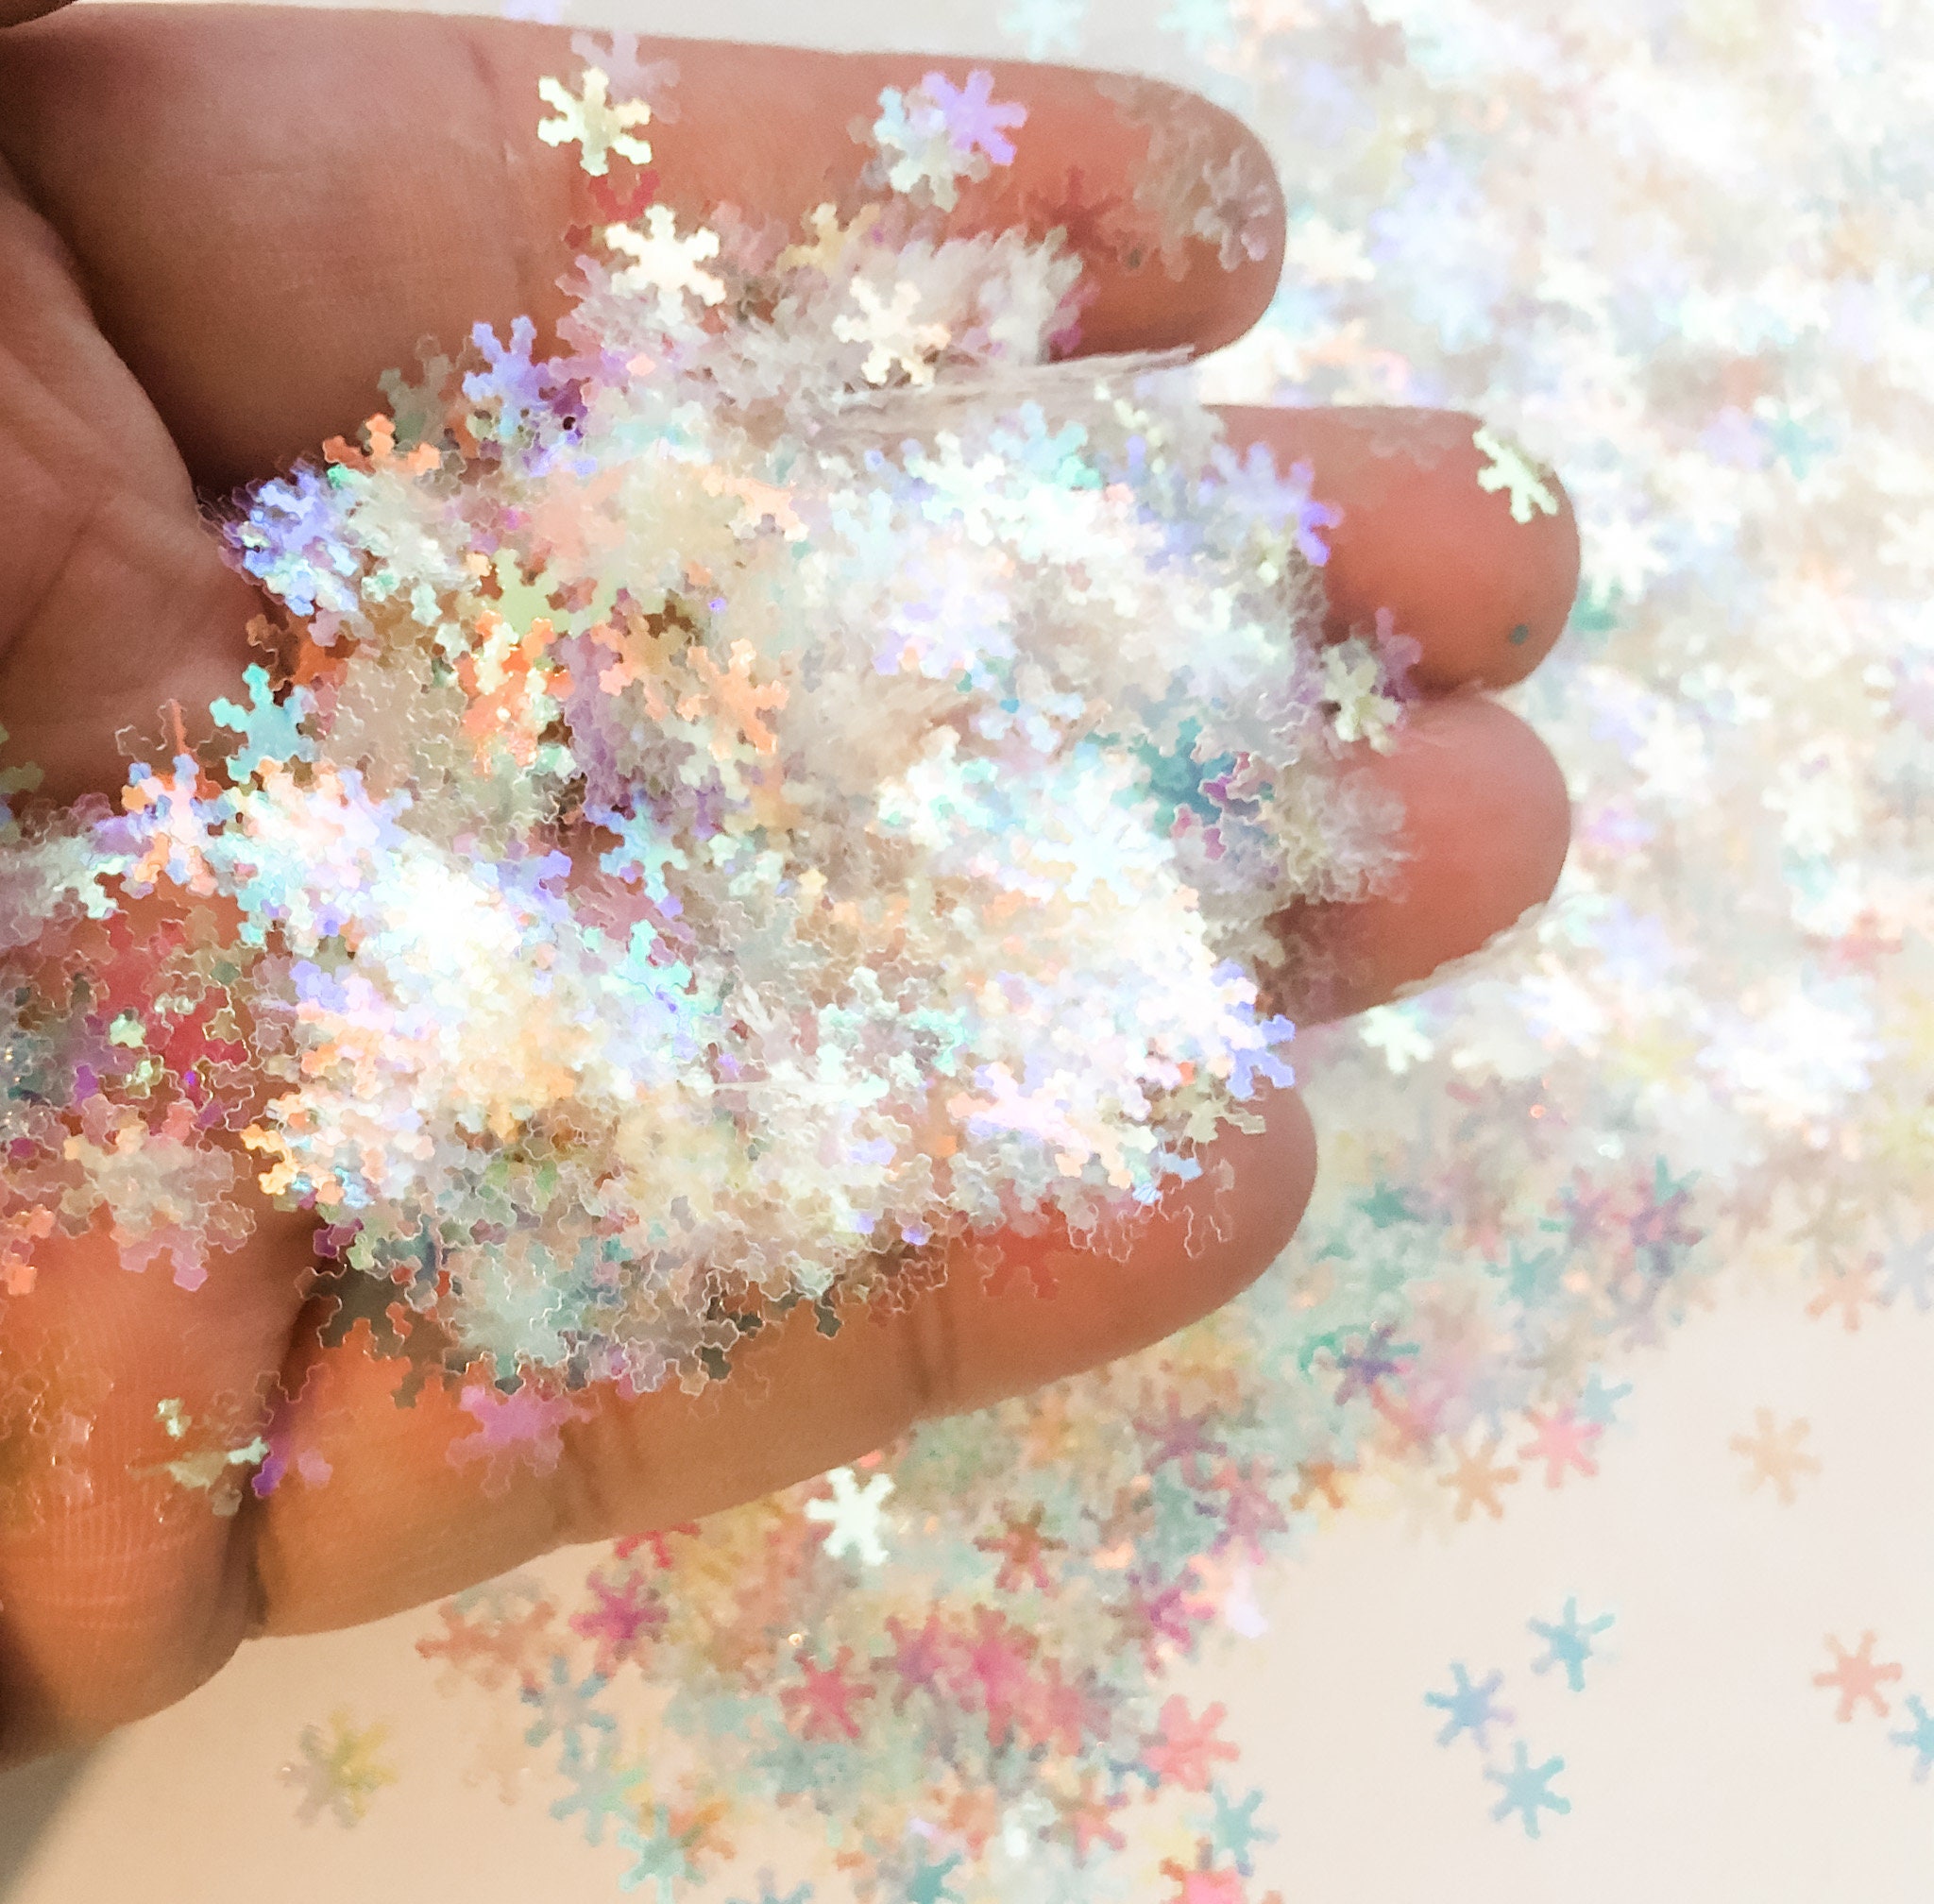 Jack Frost Iridescent Blue Clear Snowflake Glitter, Christmas Glitter, Nail  Art Glitter, Deco, Holiday Glitter, Pick Your Amount, F568 